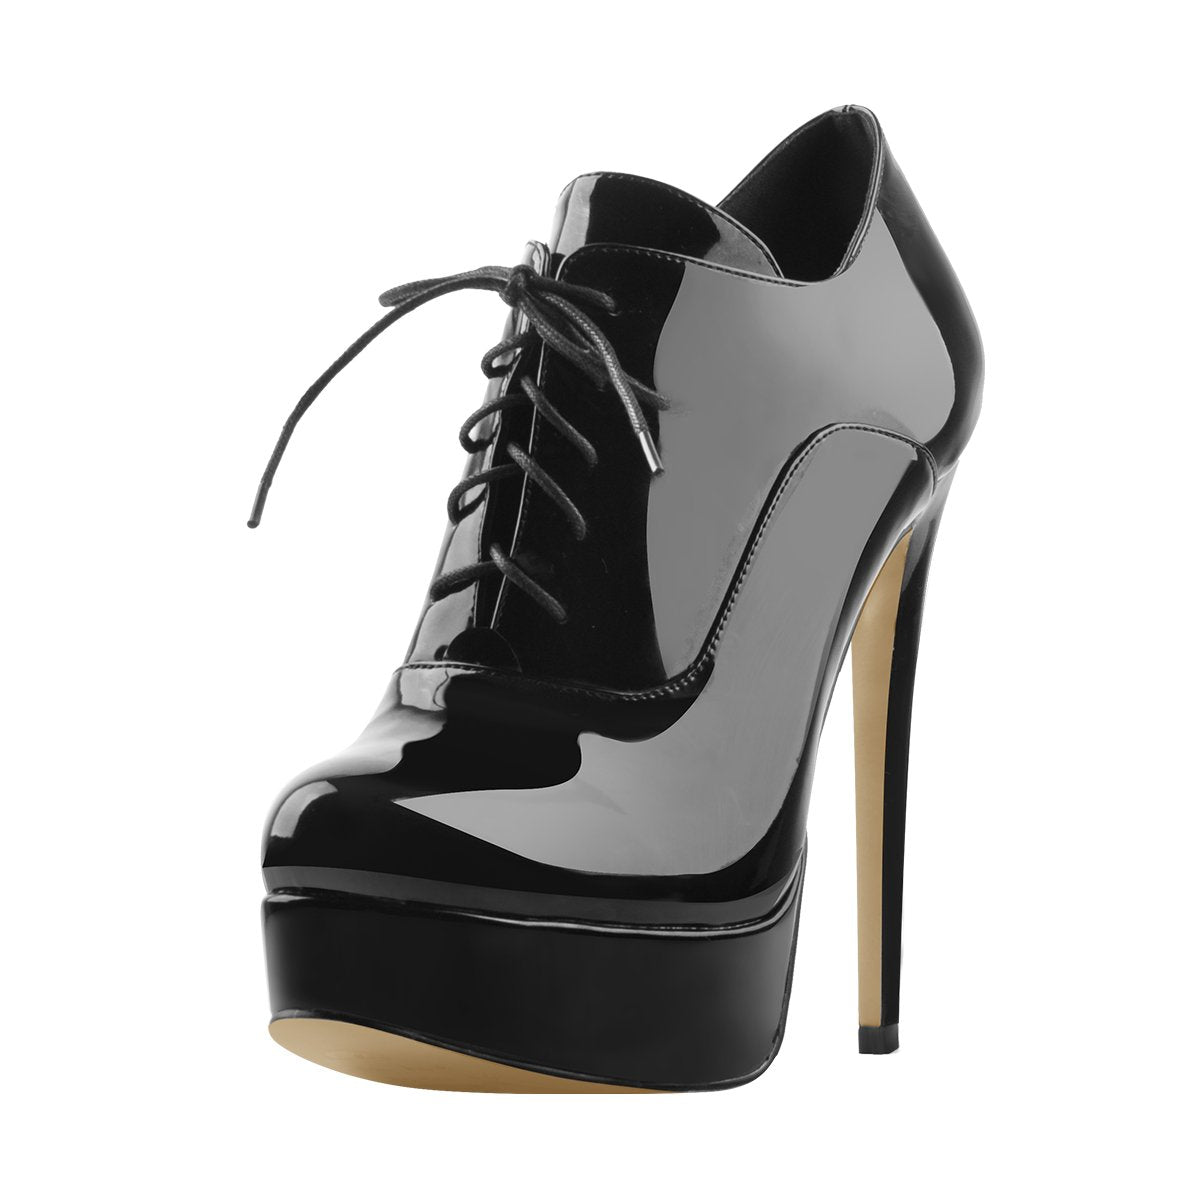 Patent Black Sandals - Lace-Up High Heels - High Heel Sandals - Lulus